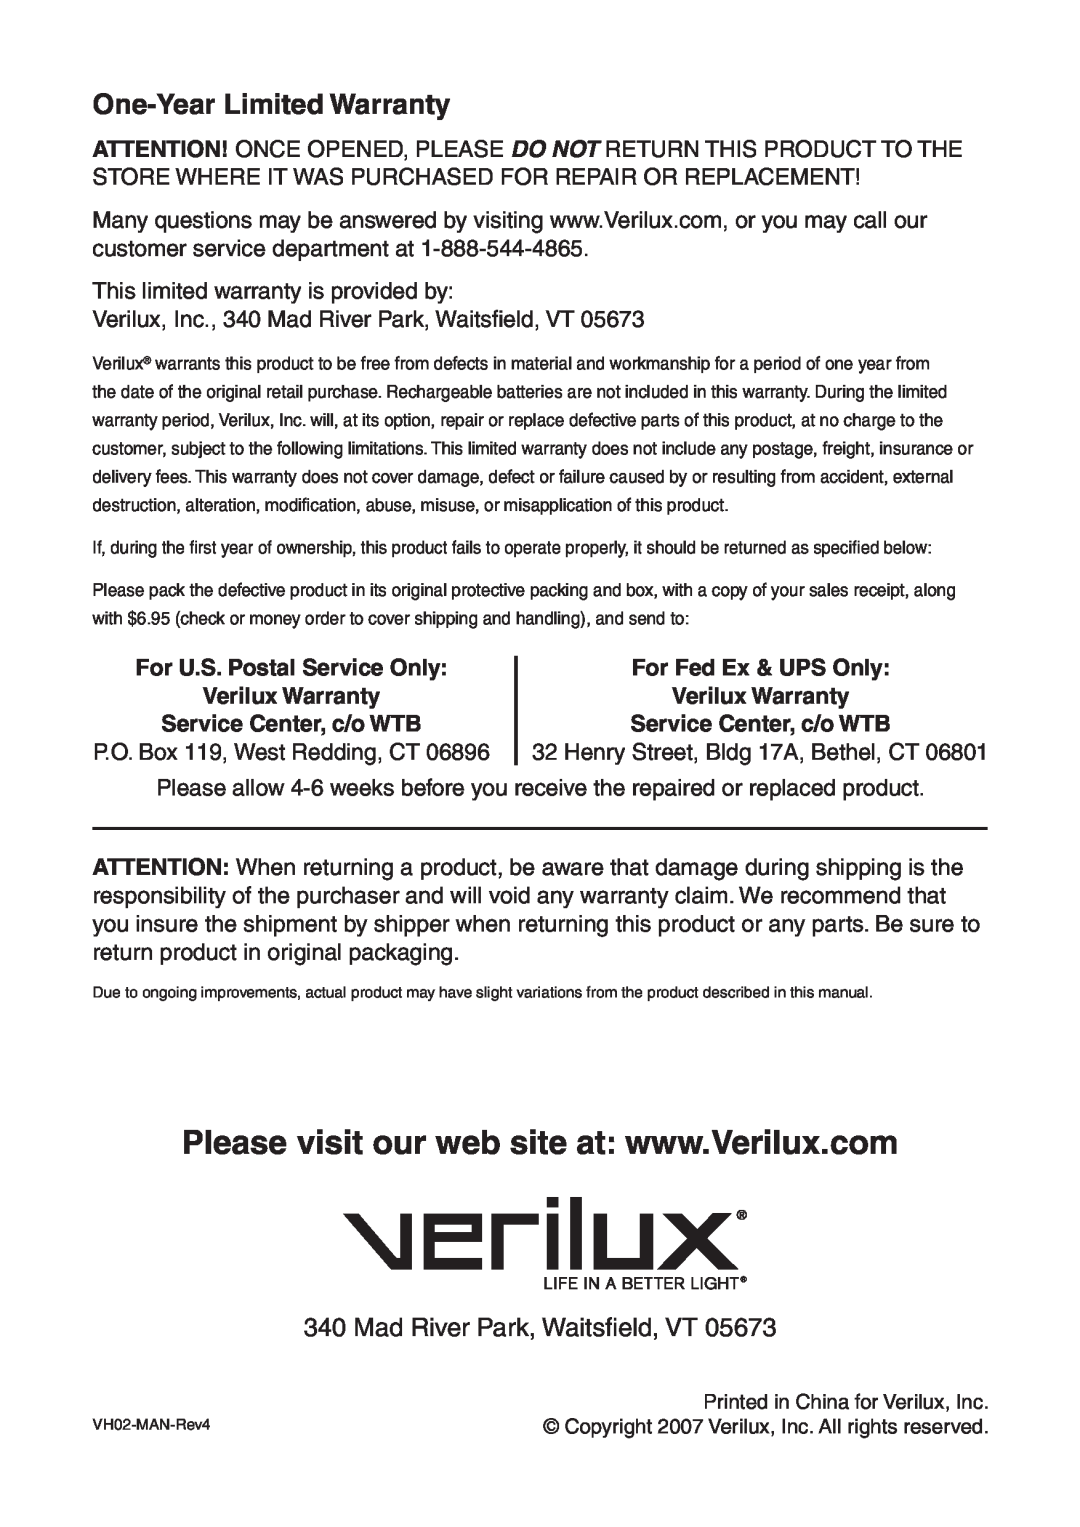 Verilux VH02 manual One-YearLimited Warranty, For U.S. Postal Service Only Verilux Warranty, Service Center, c/o WTB 